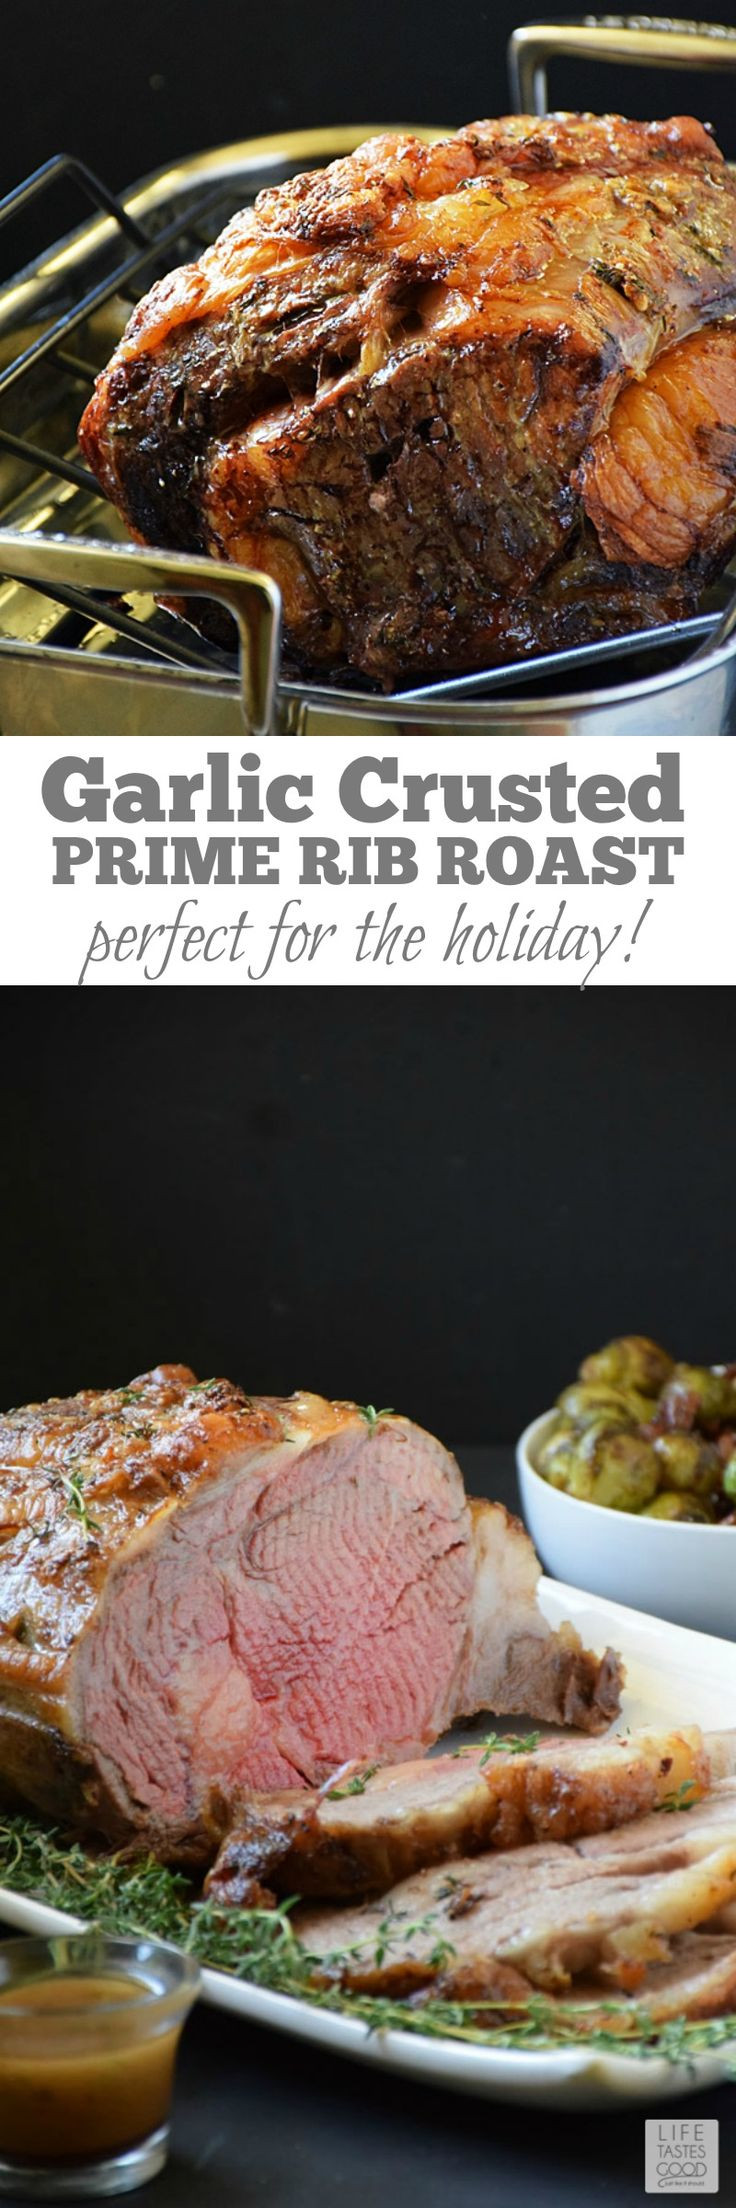 Prime Rib Christmas Dinner Menu Ideas
 Best 25 Xmas dinner ideas ideas on Pinterest